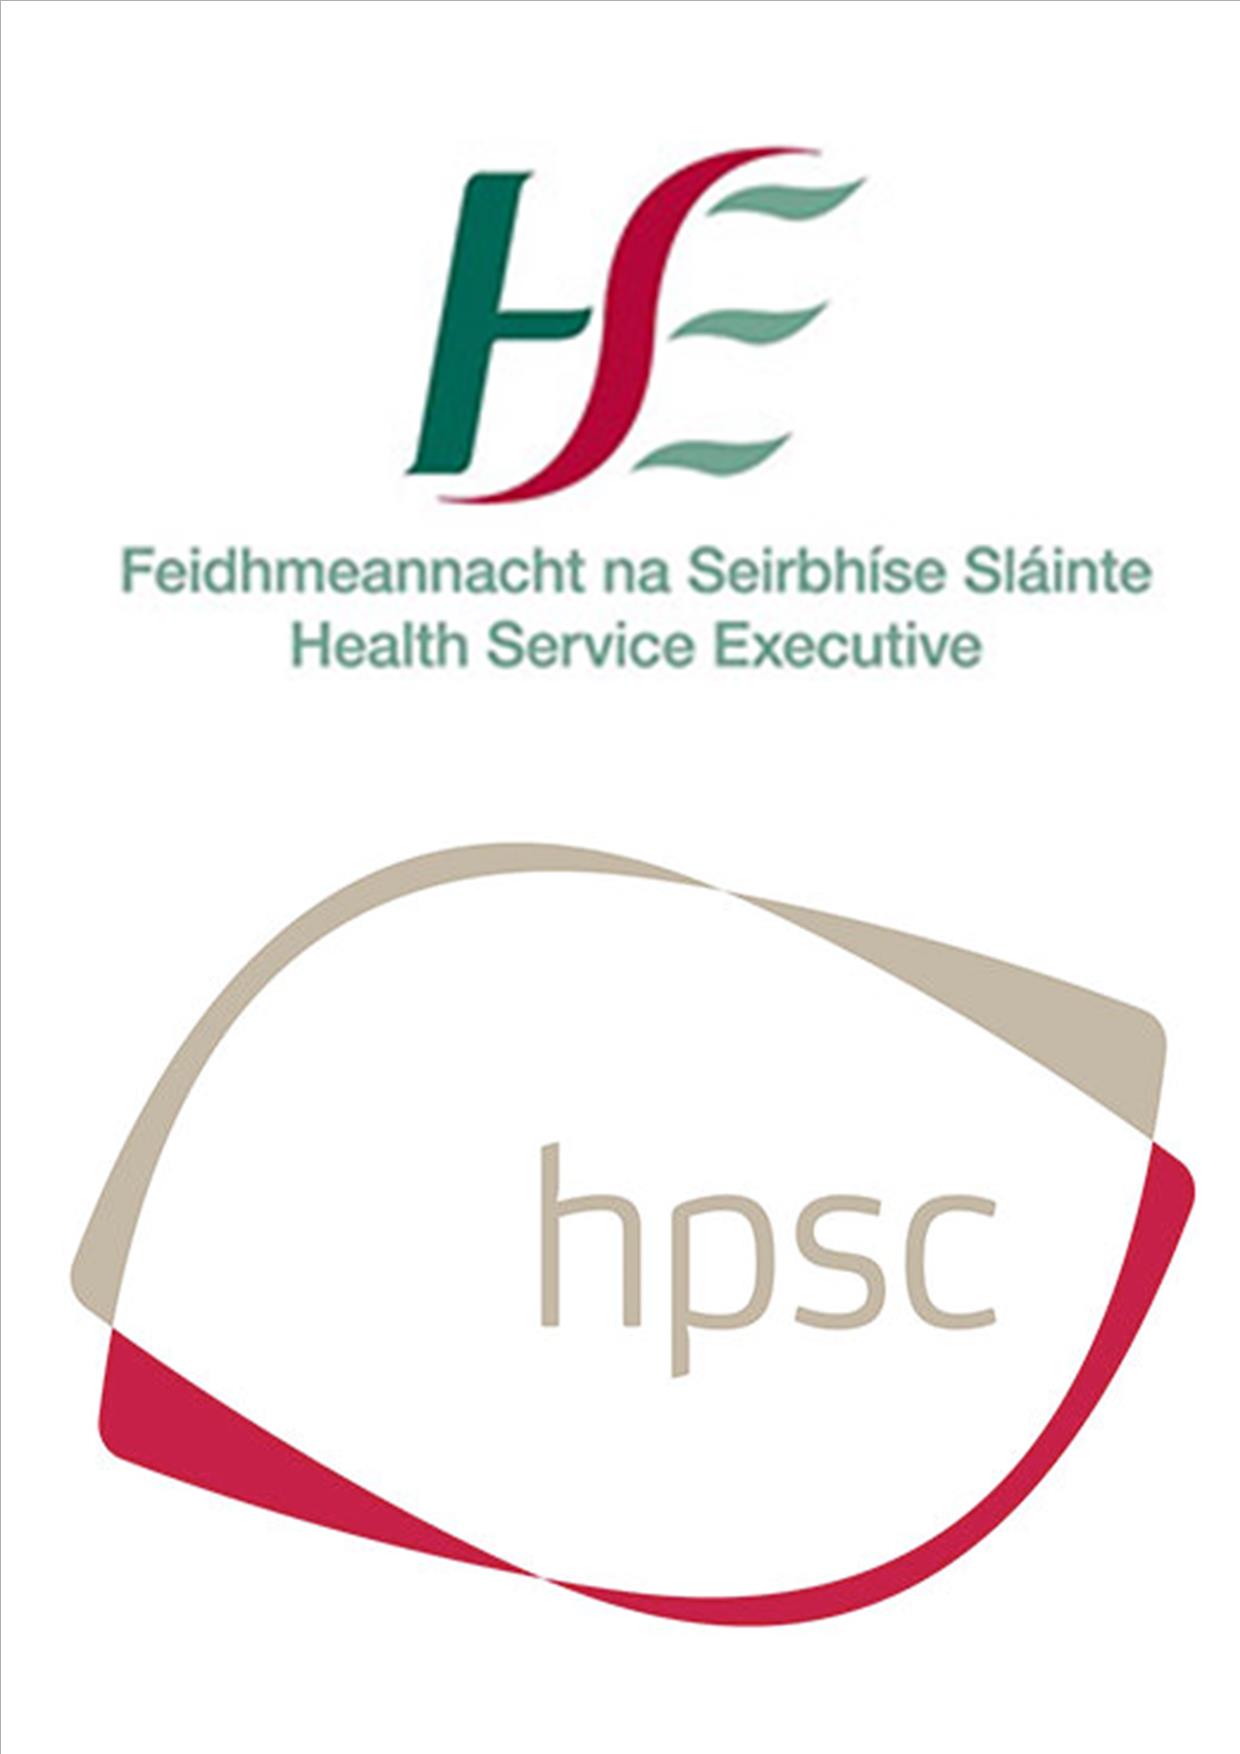 hpsc HSE logo